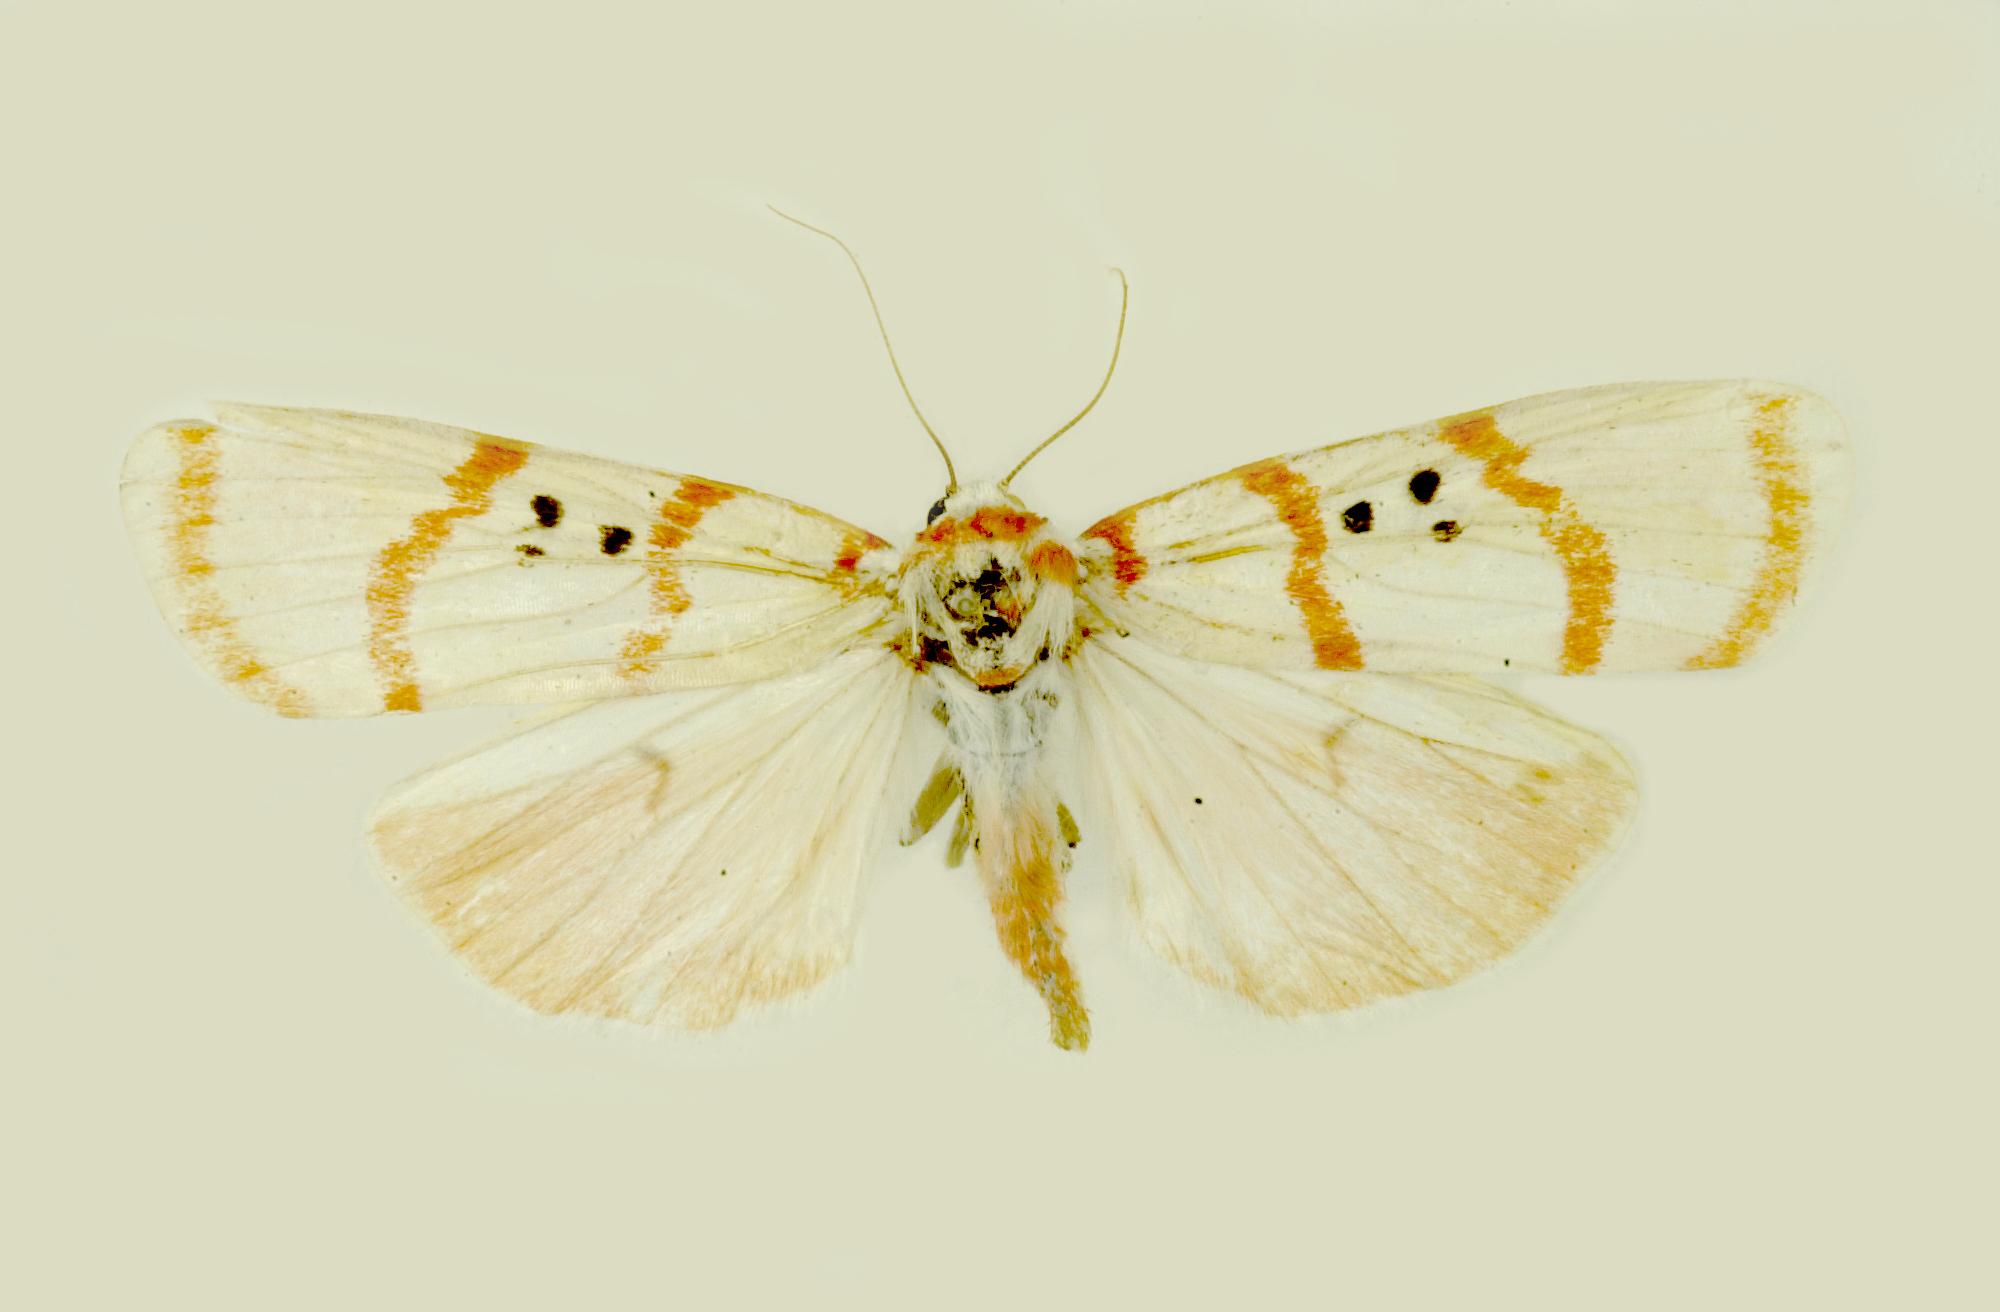 中文名稱:燈蛾英文名稱:Tiger moths;Footman moths;Wasp moths